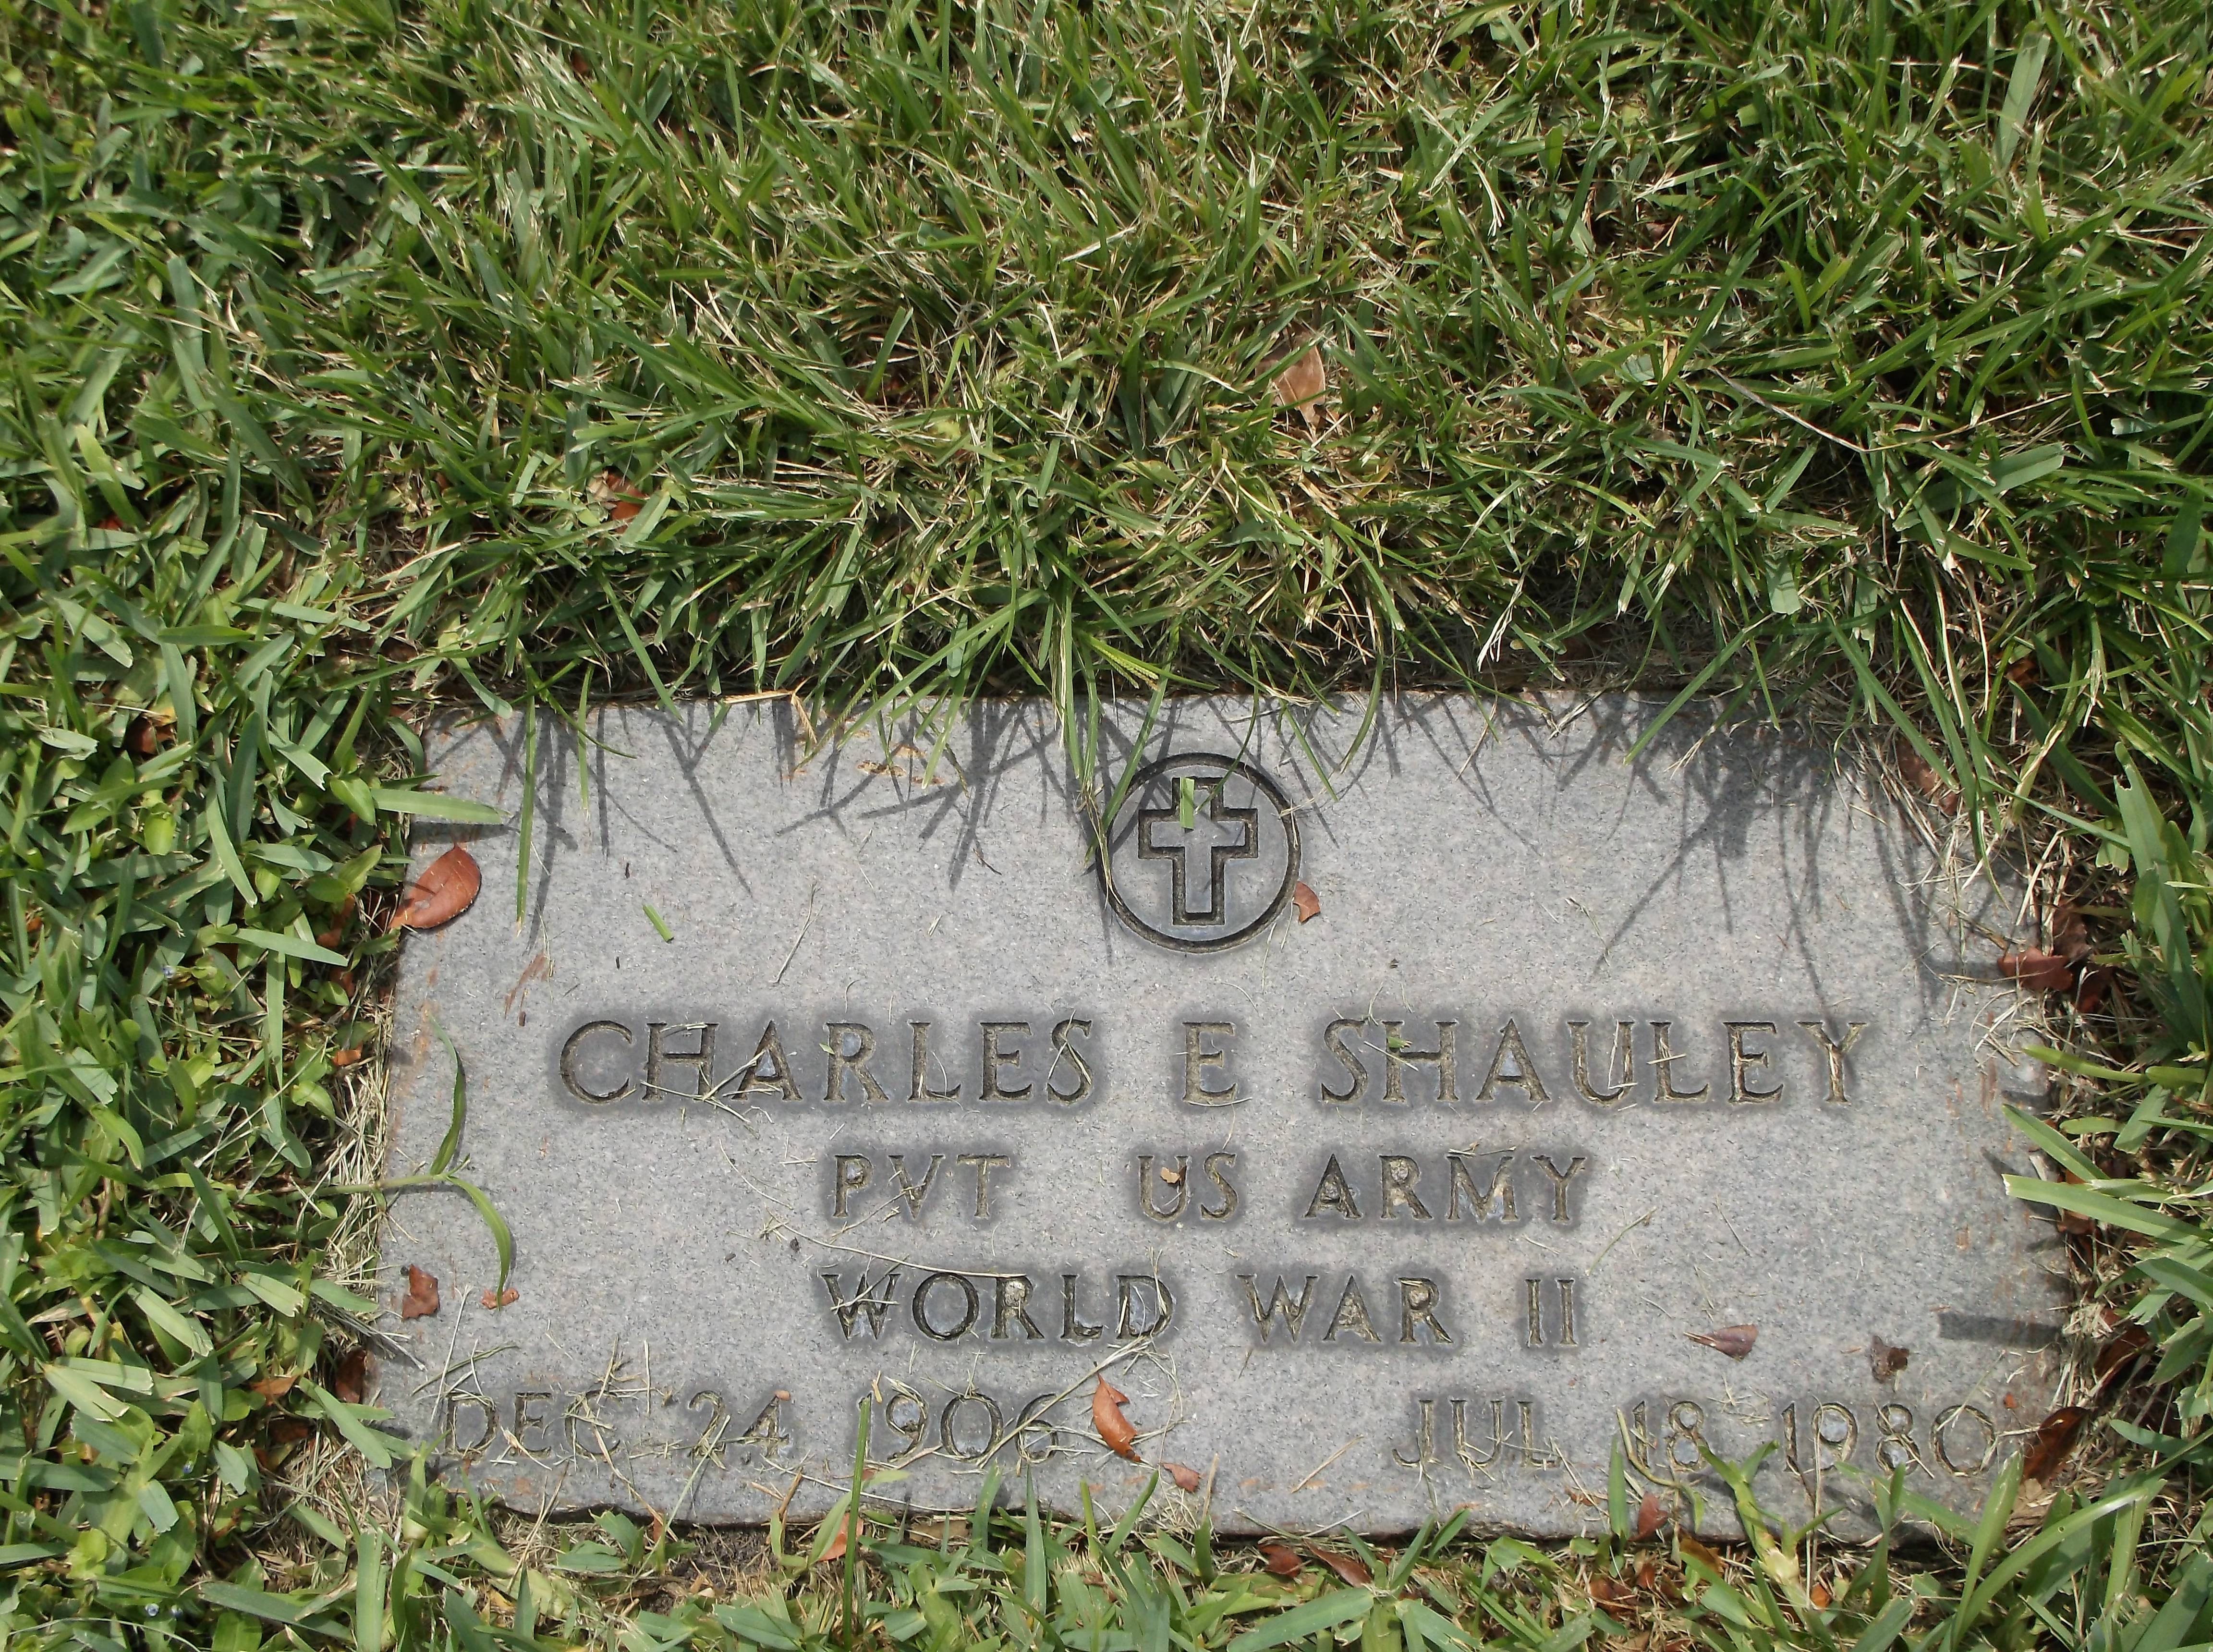 Charles E Shauley